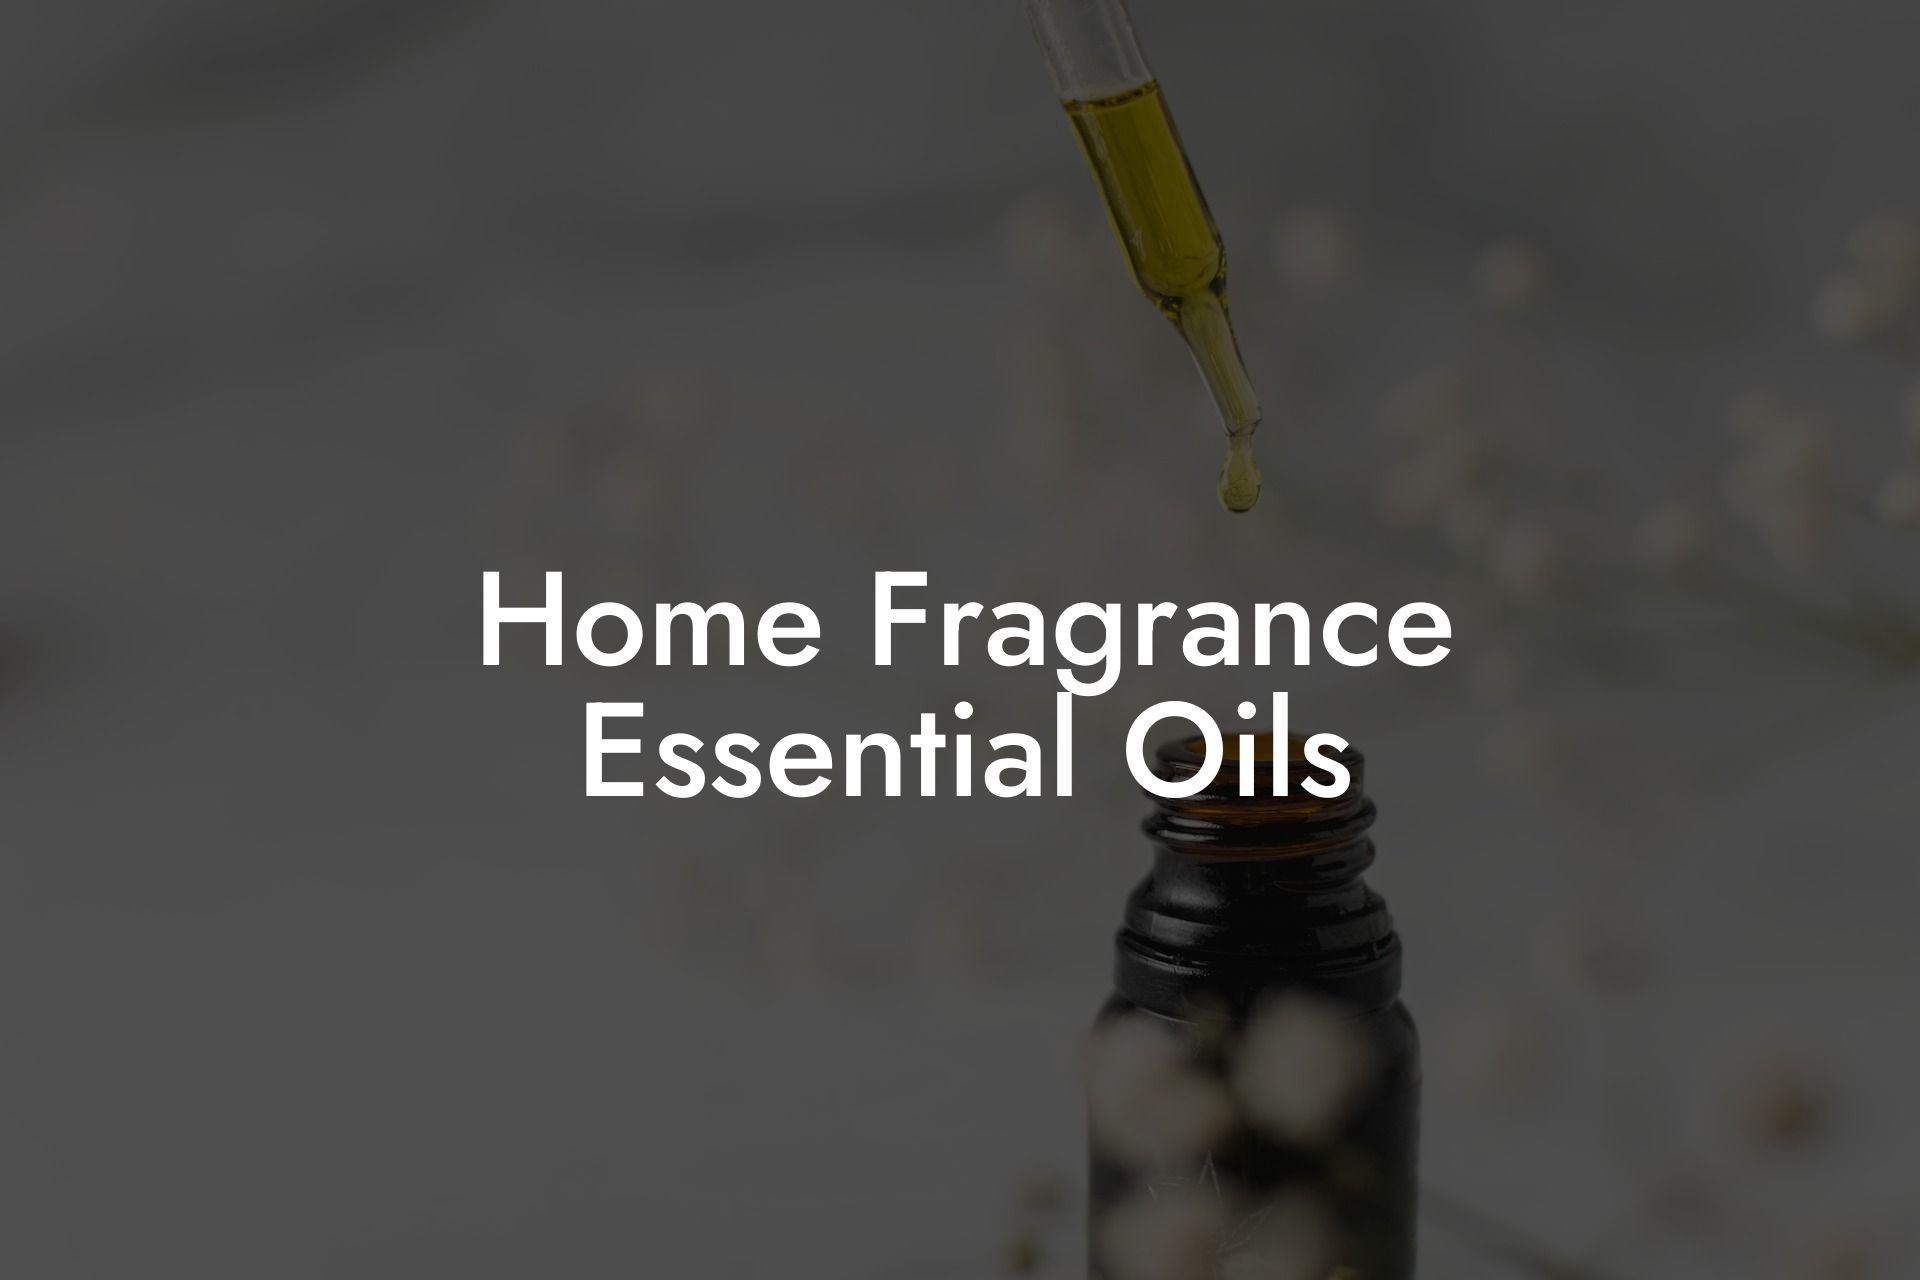 Home Fragrance Essential Oils